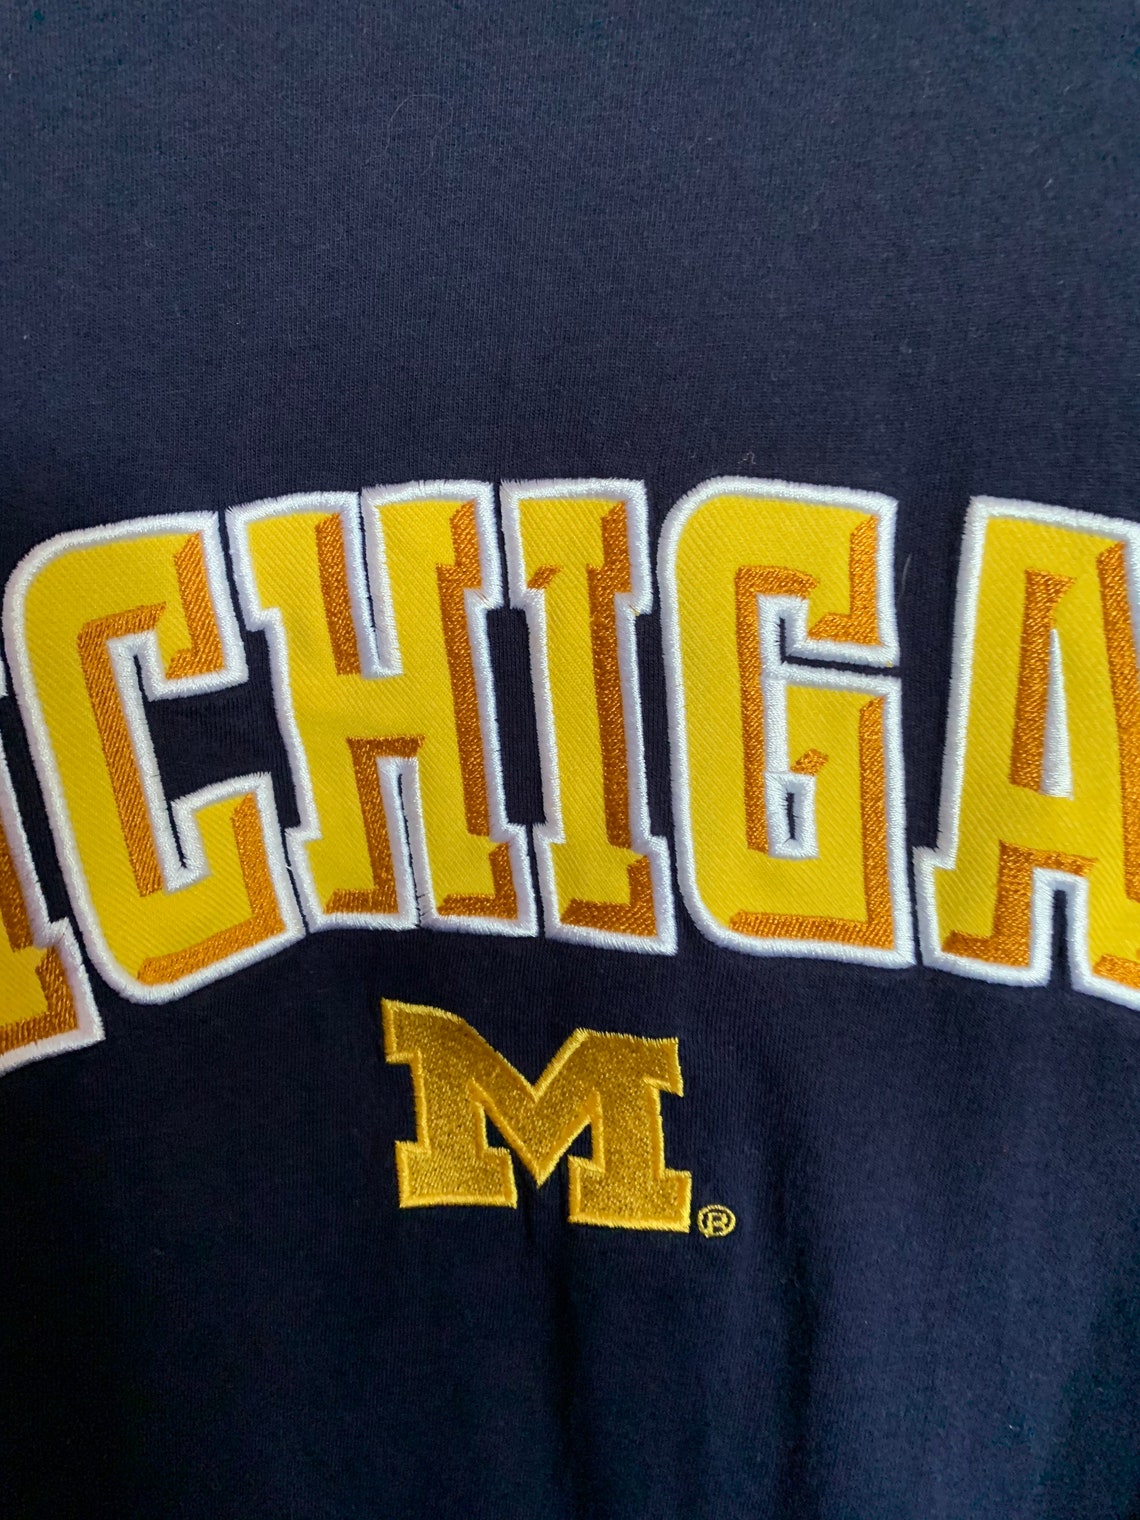 Michigan Wolverines University Ann Arbor Embroidered Shirt | Etsy